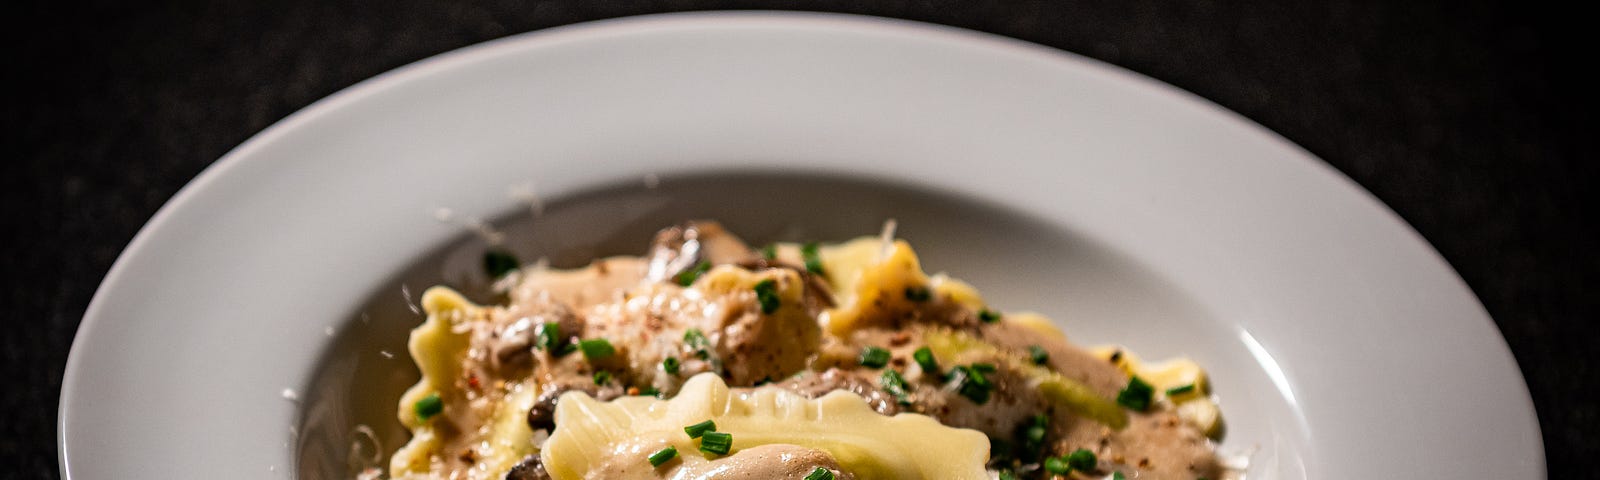 An image of Ravioli in mushroom cream sauce in a shallo pasta bowl